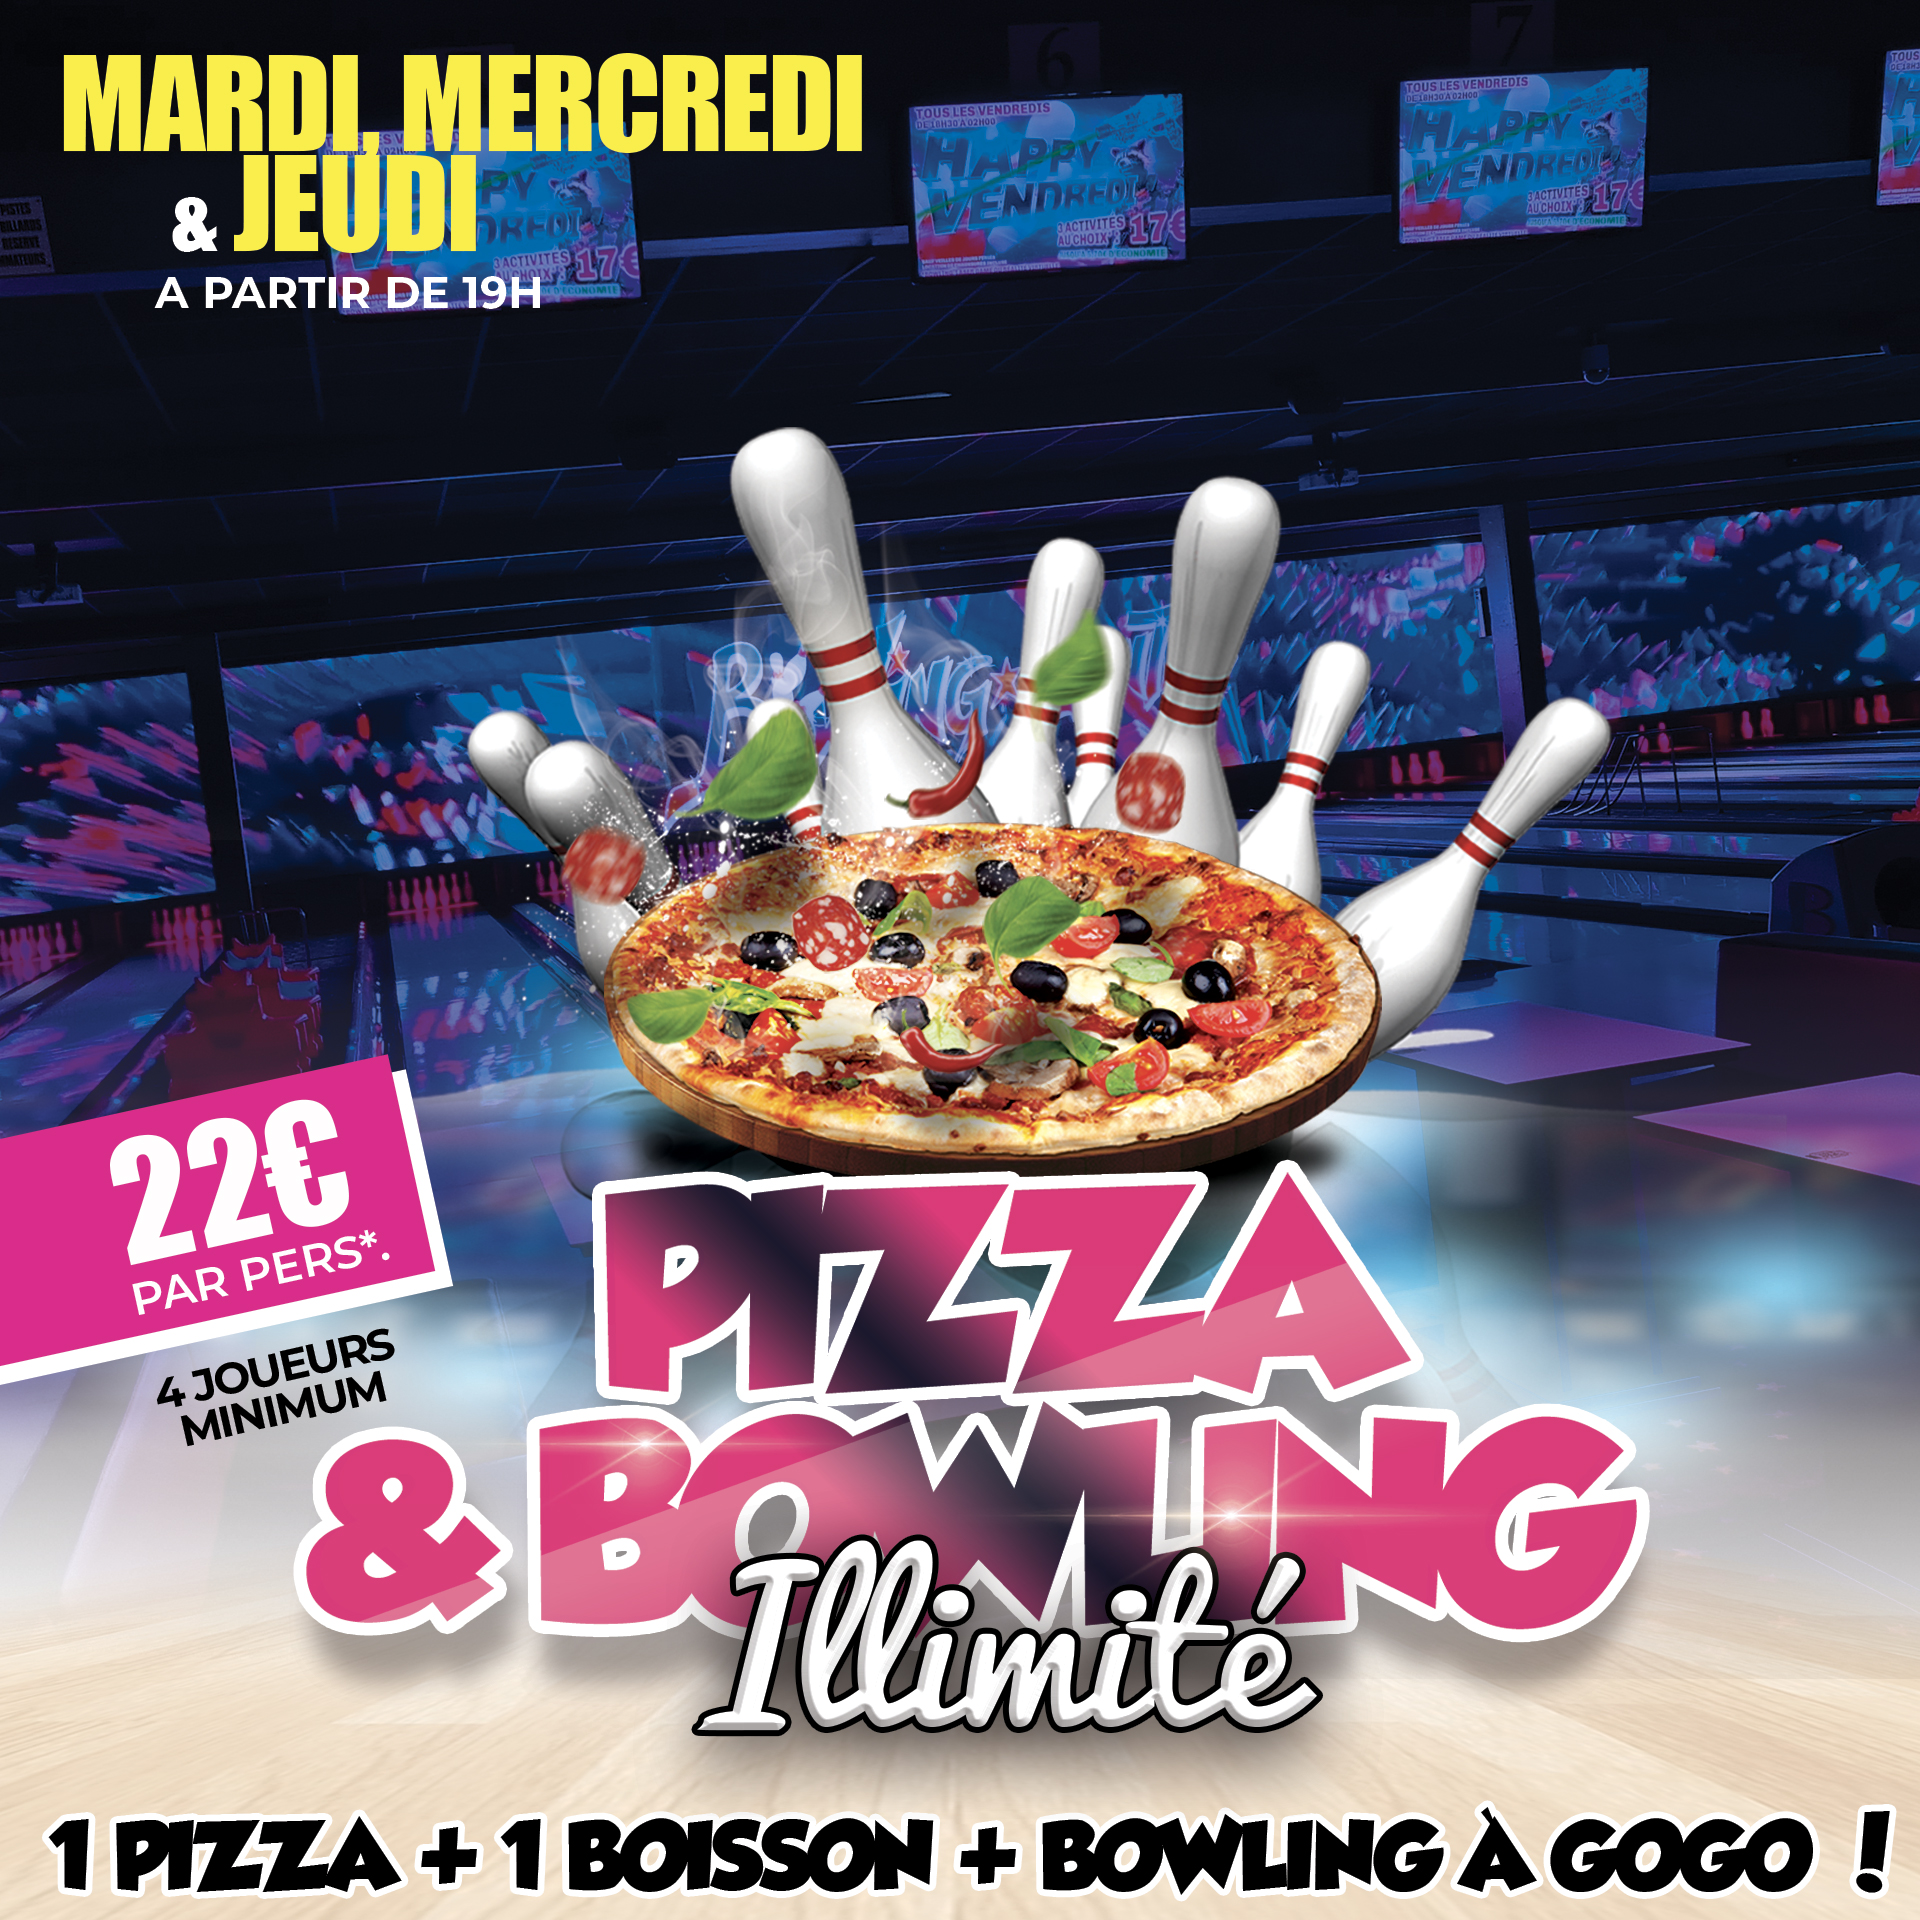 Mercredi & Jeudi : Pizza & Bowling Illimité